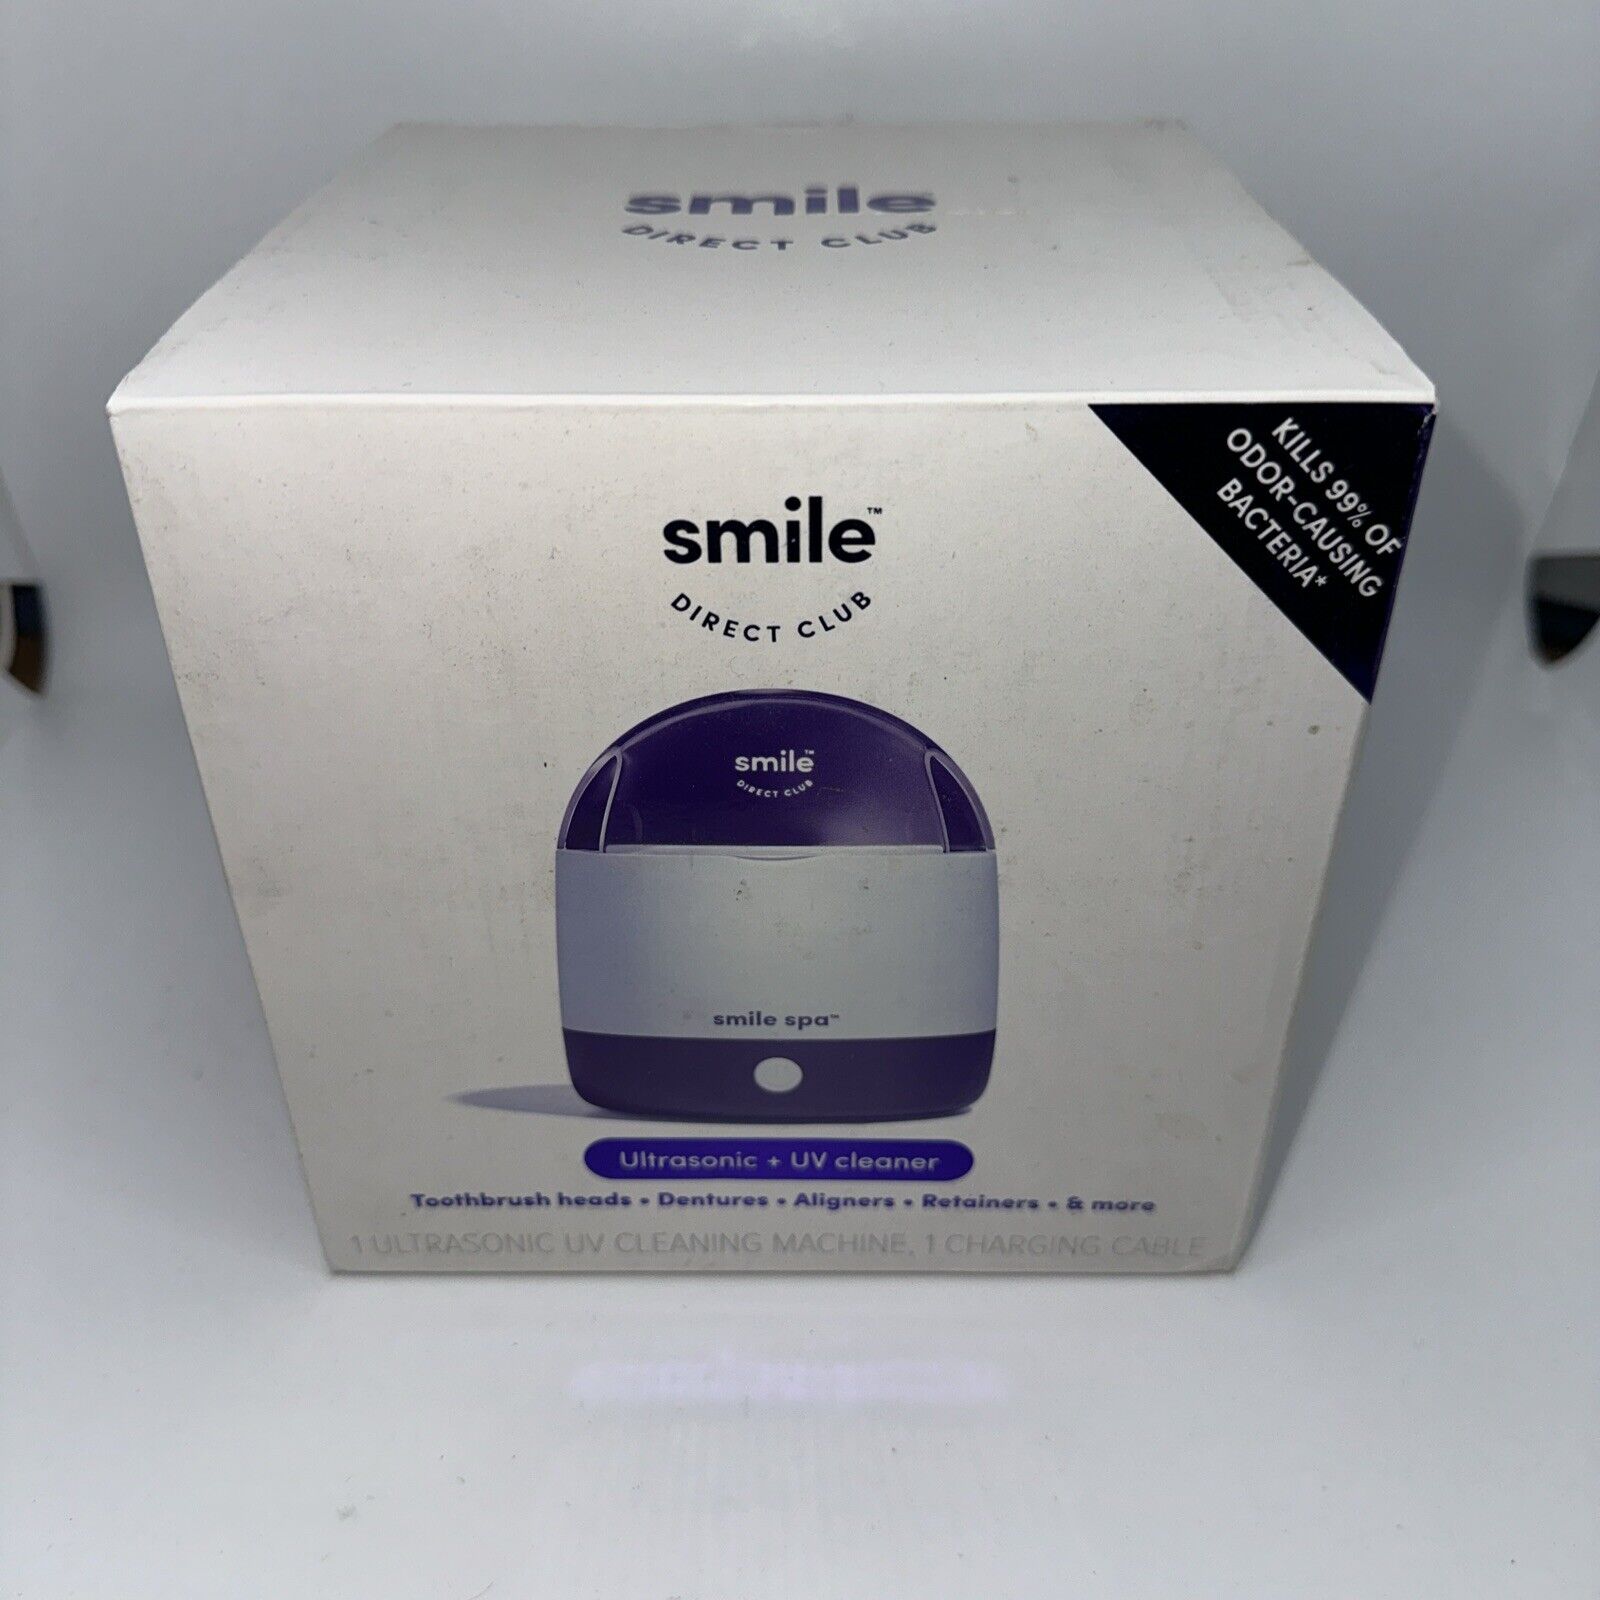 SmileDirectClub Smile Spa Ultrasonic + UV Cleaner